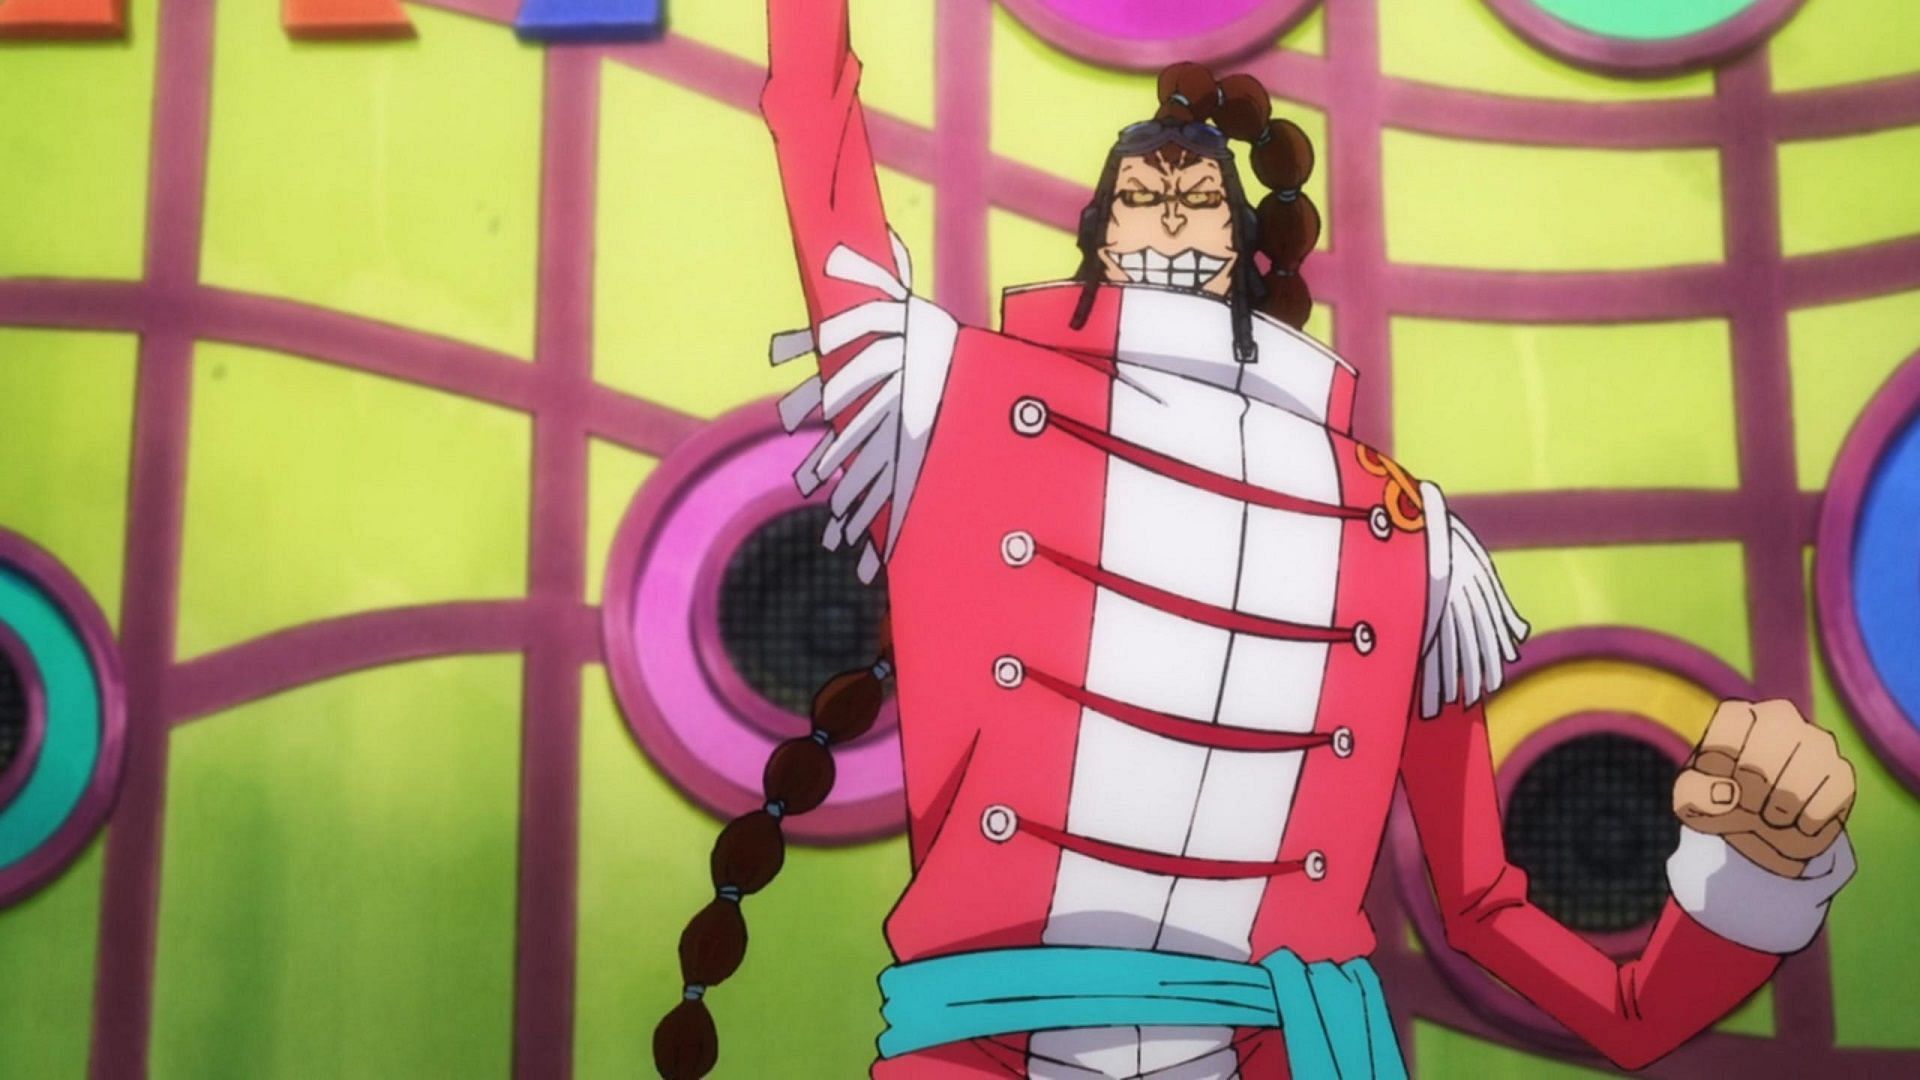 Longarms representative Scratchman Apoo, as seen in One Piece (Image via Toei Animation, One Piece)